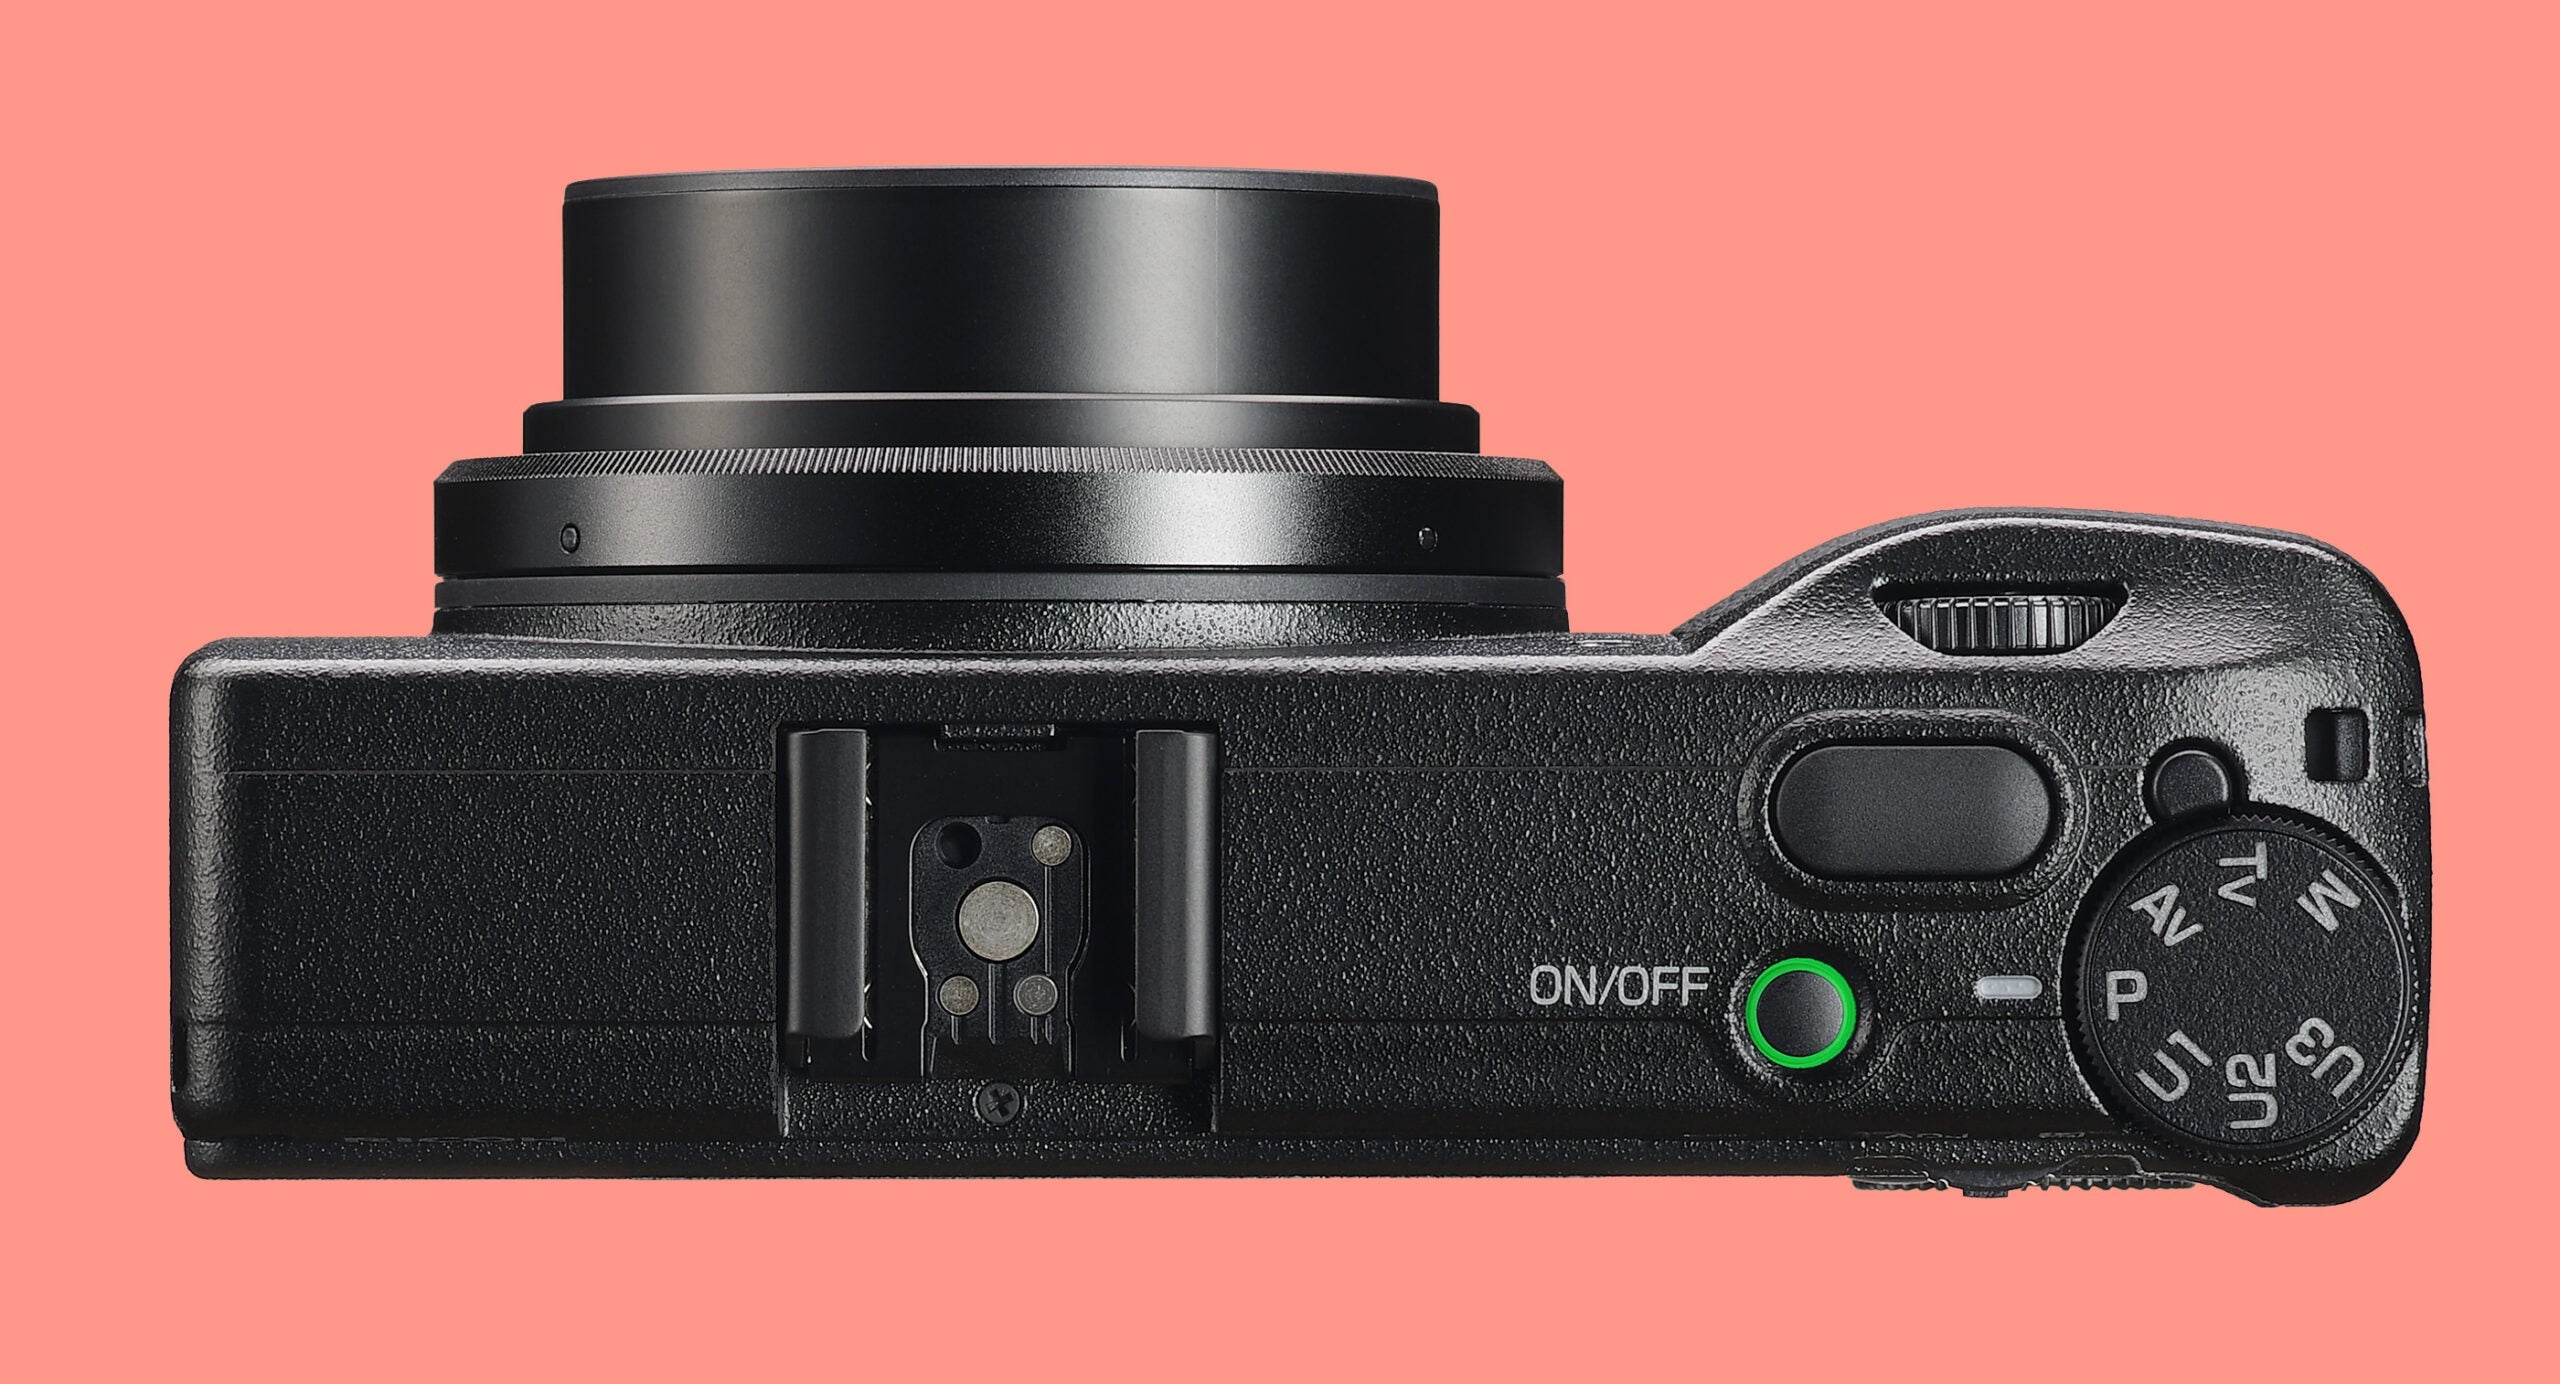 The Ricoh GR IIIx has a 40mm equivalent f/2.8 lens.